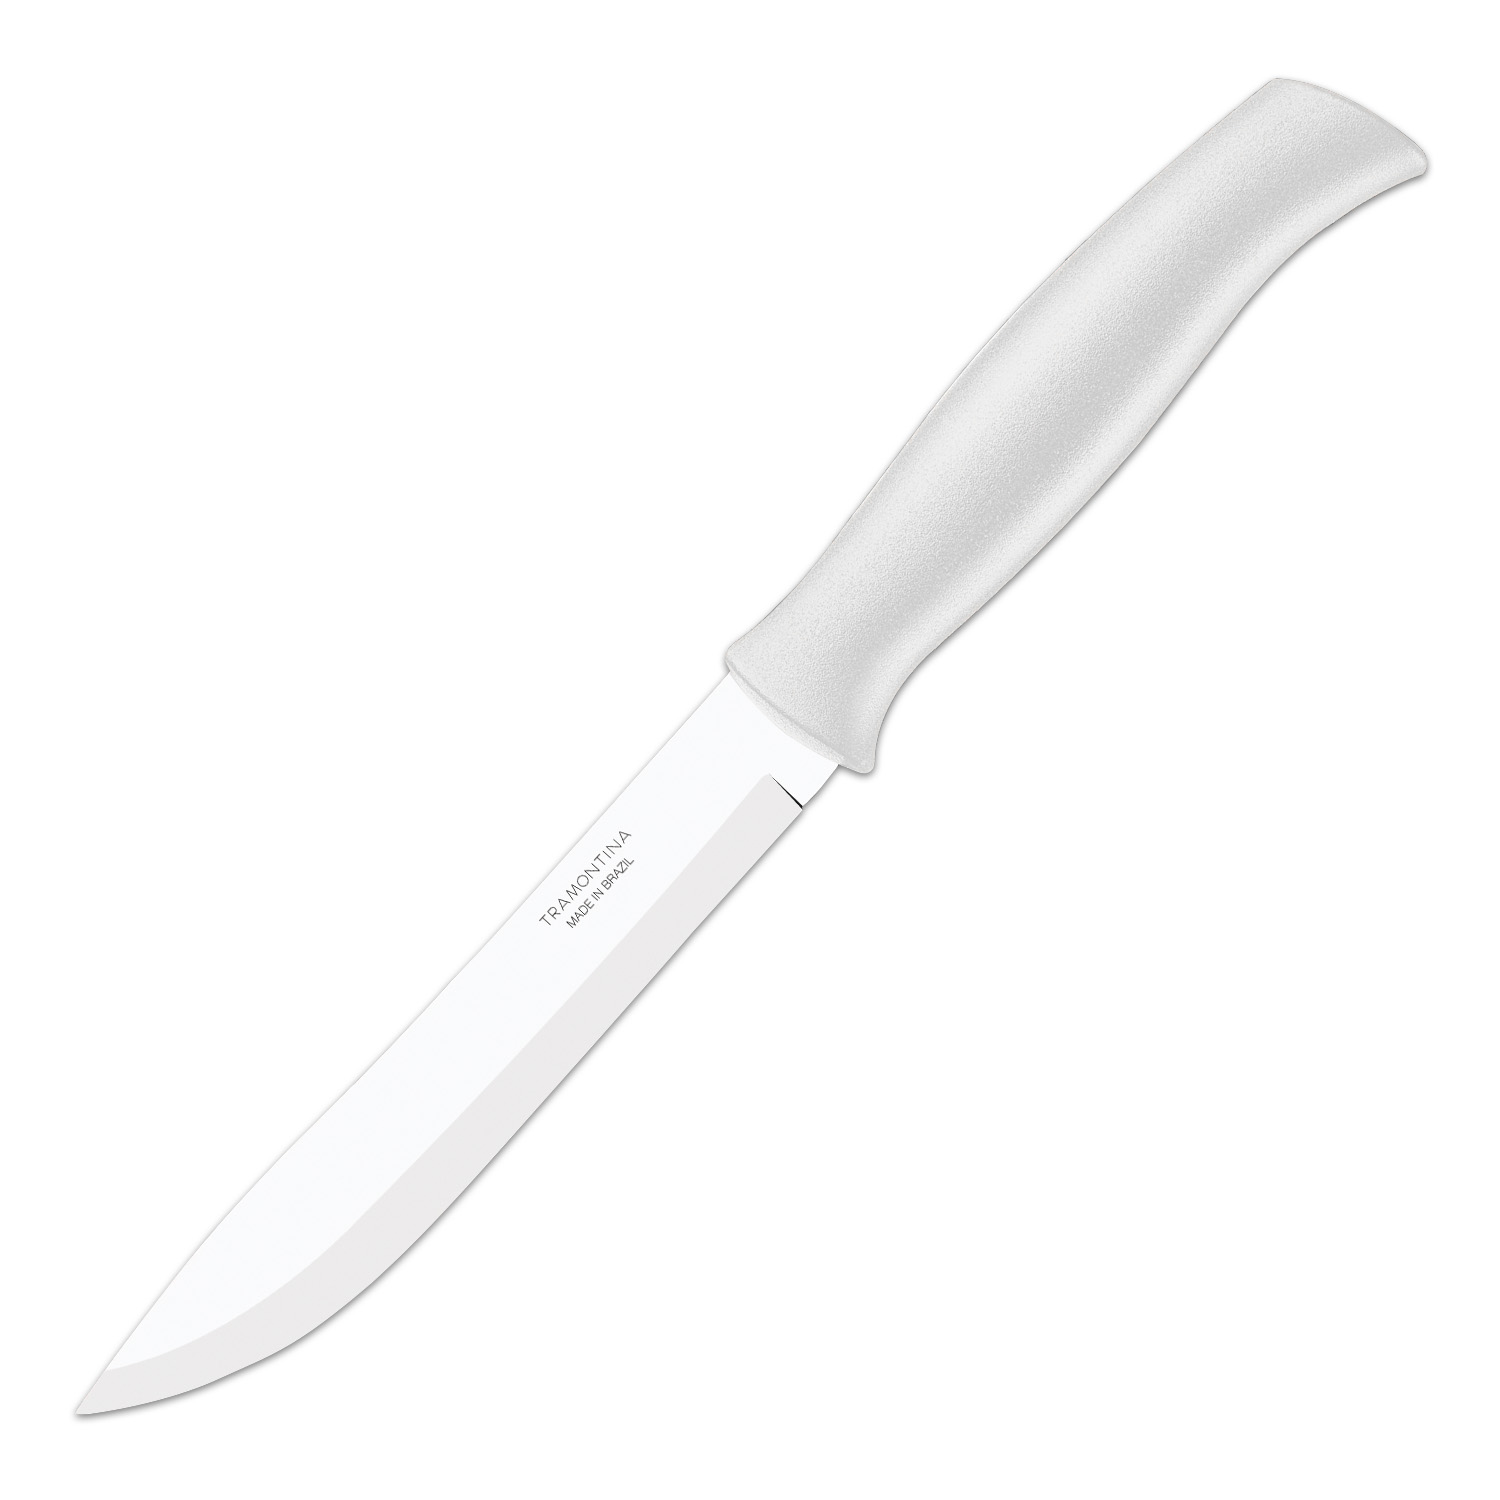 Нож Athus 178мм/303мм для мяса белый 2шт/уп